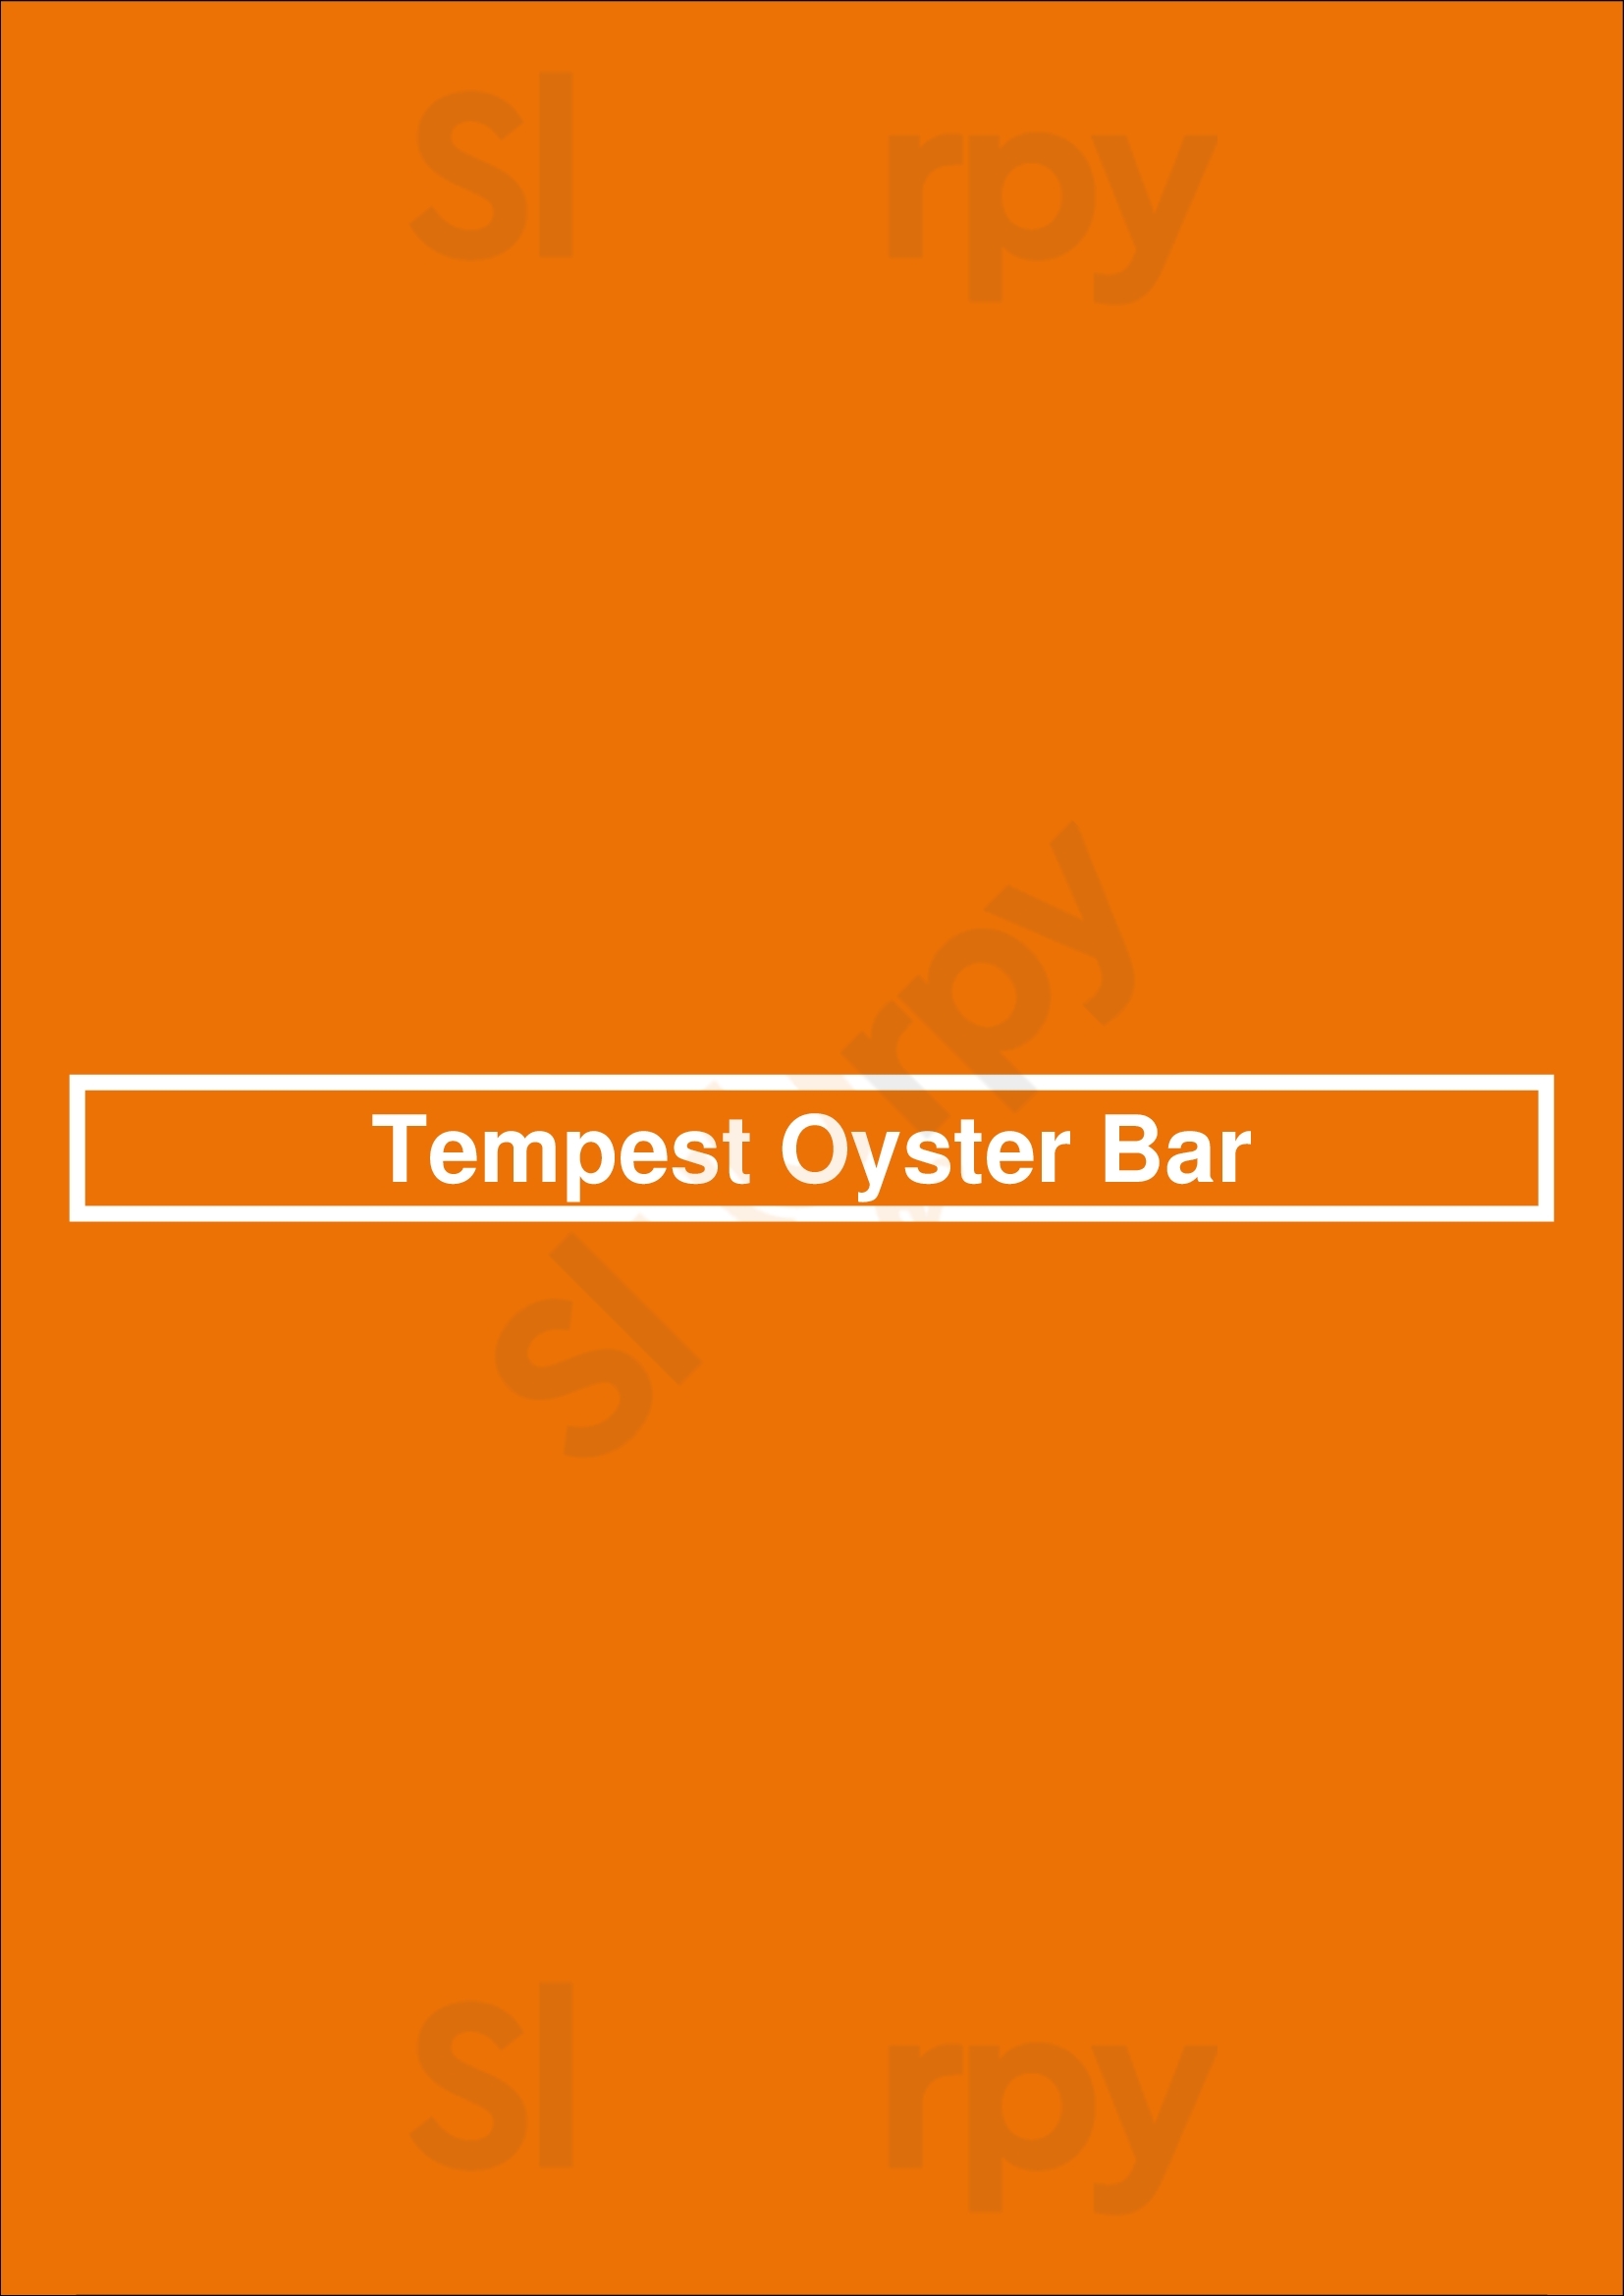 Tempest Oyster Bar Madison Menu - 1